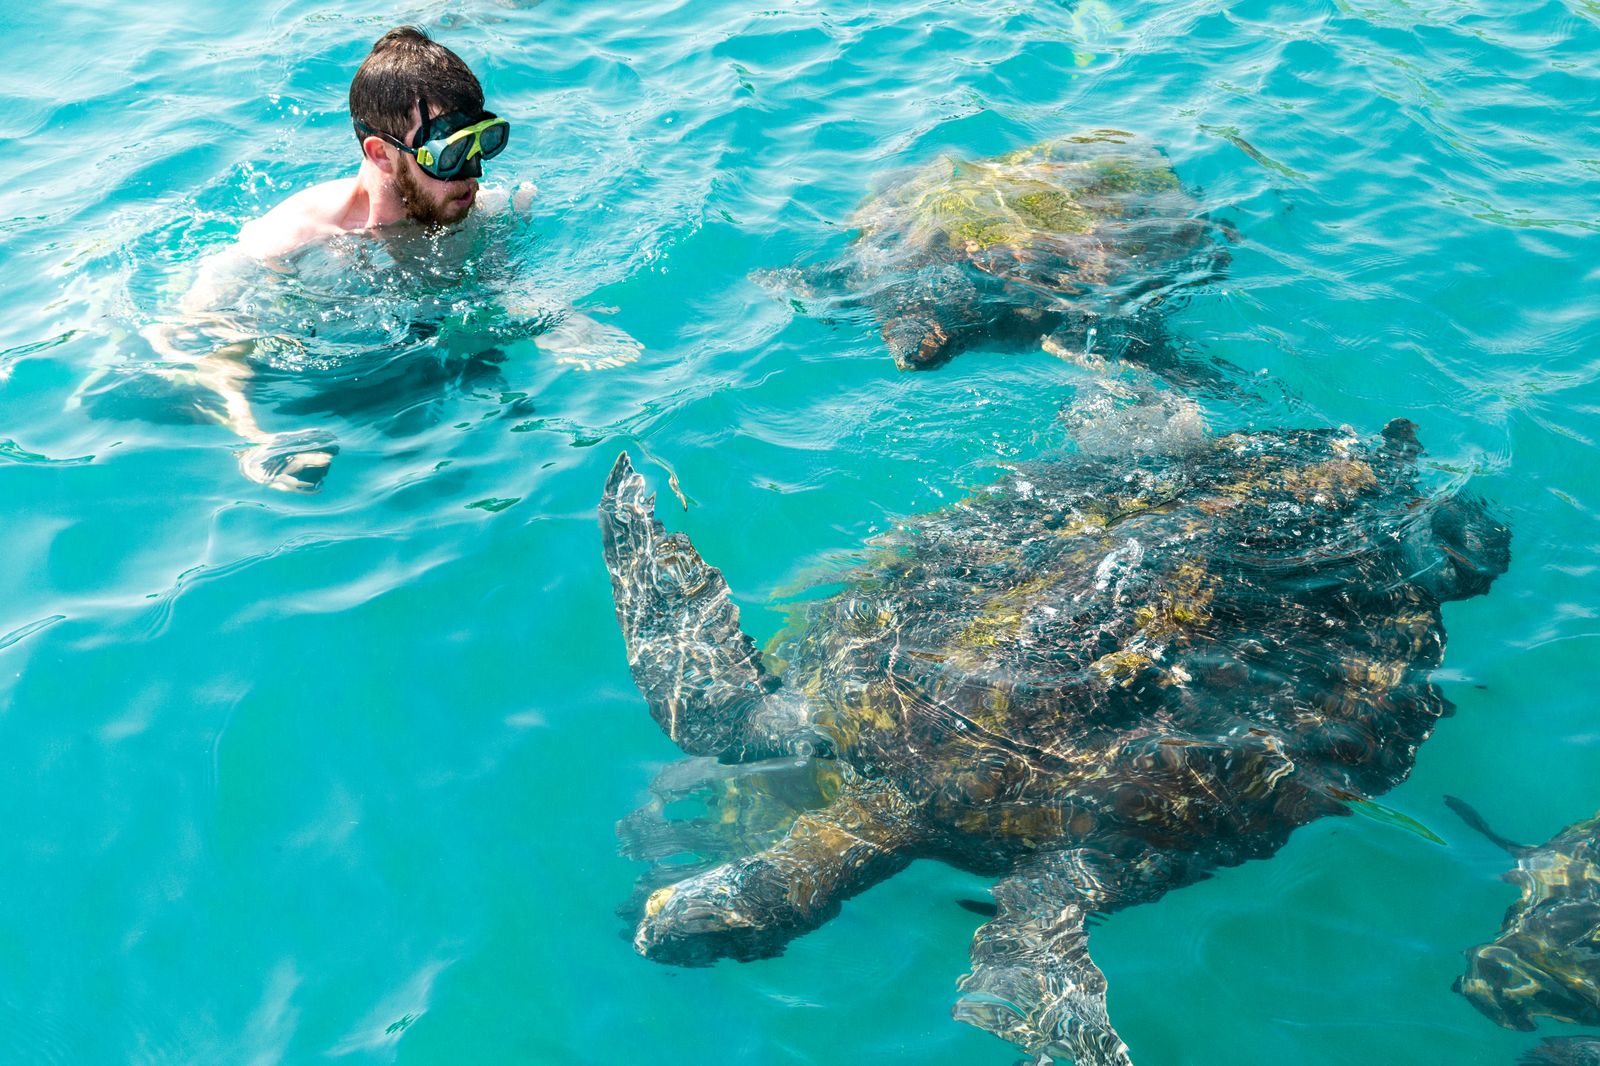 Peru-Mancora-Swim with green turtles